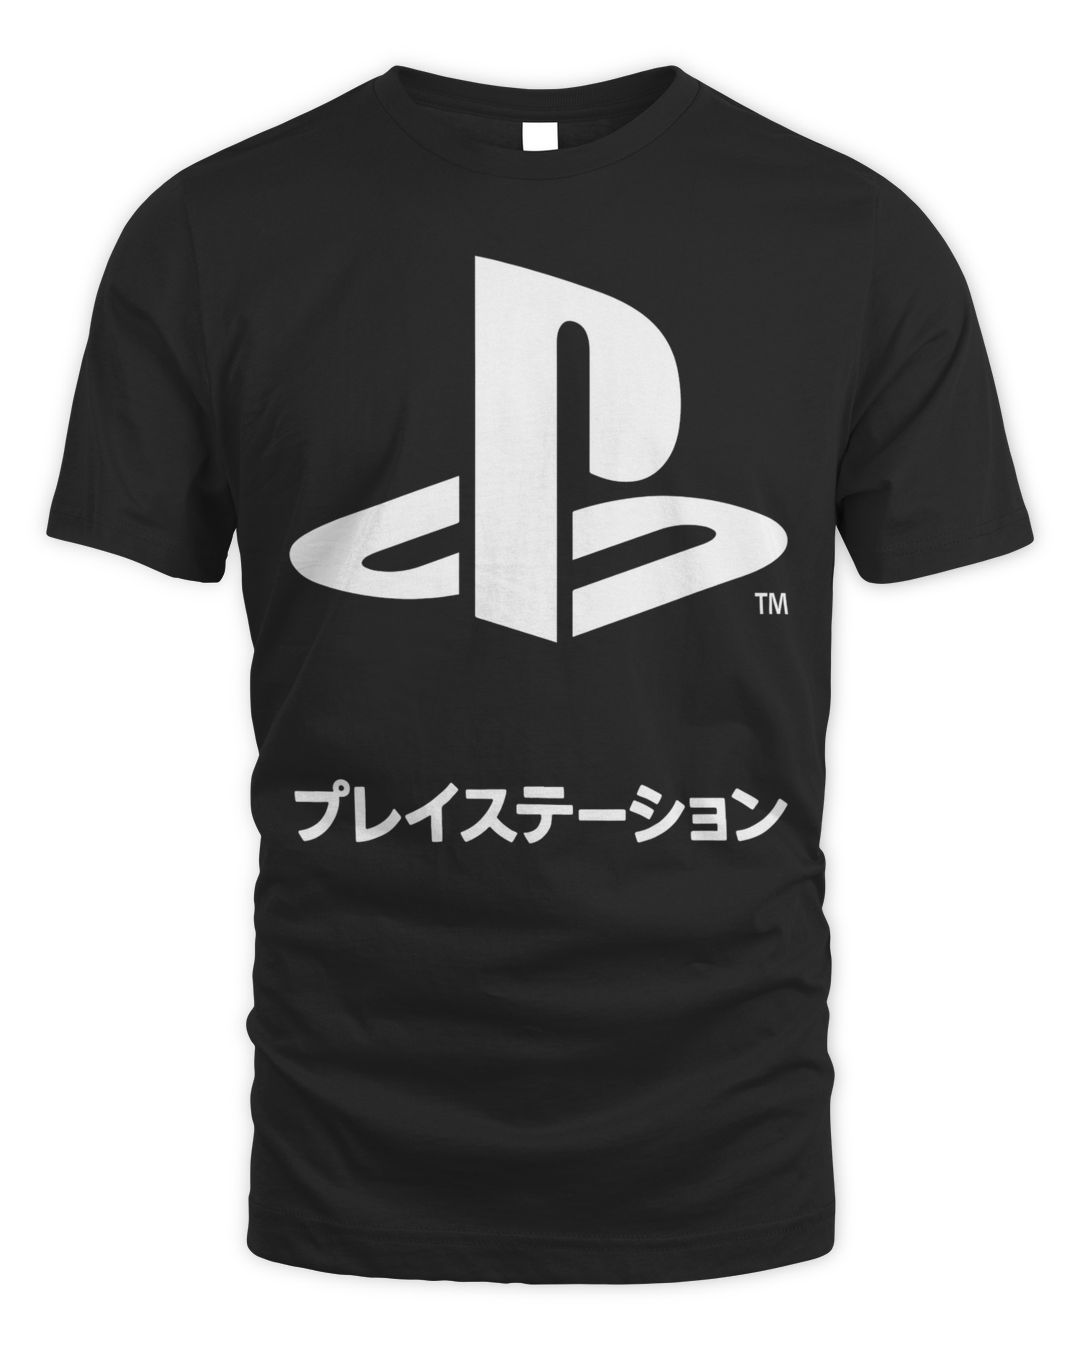 Playstation Merch Katakana Logo Shirt